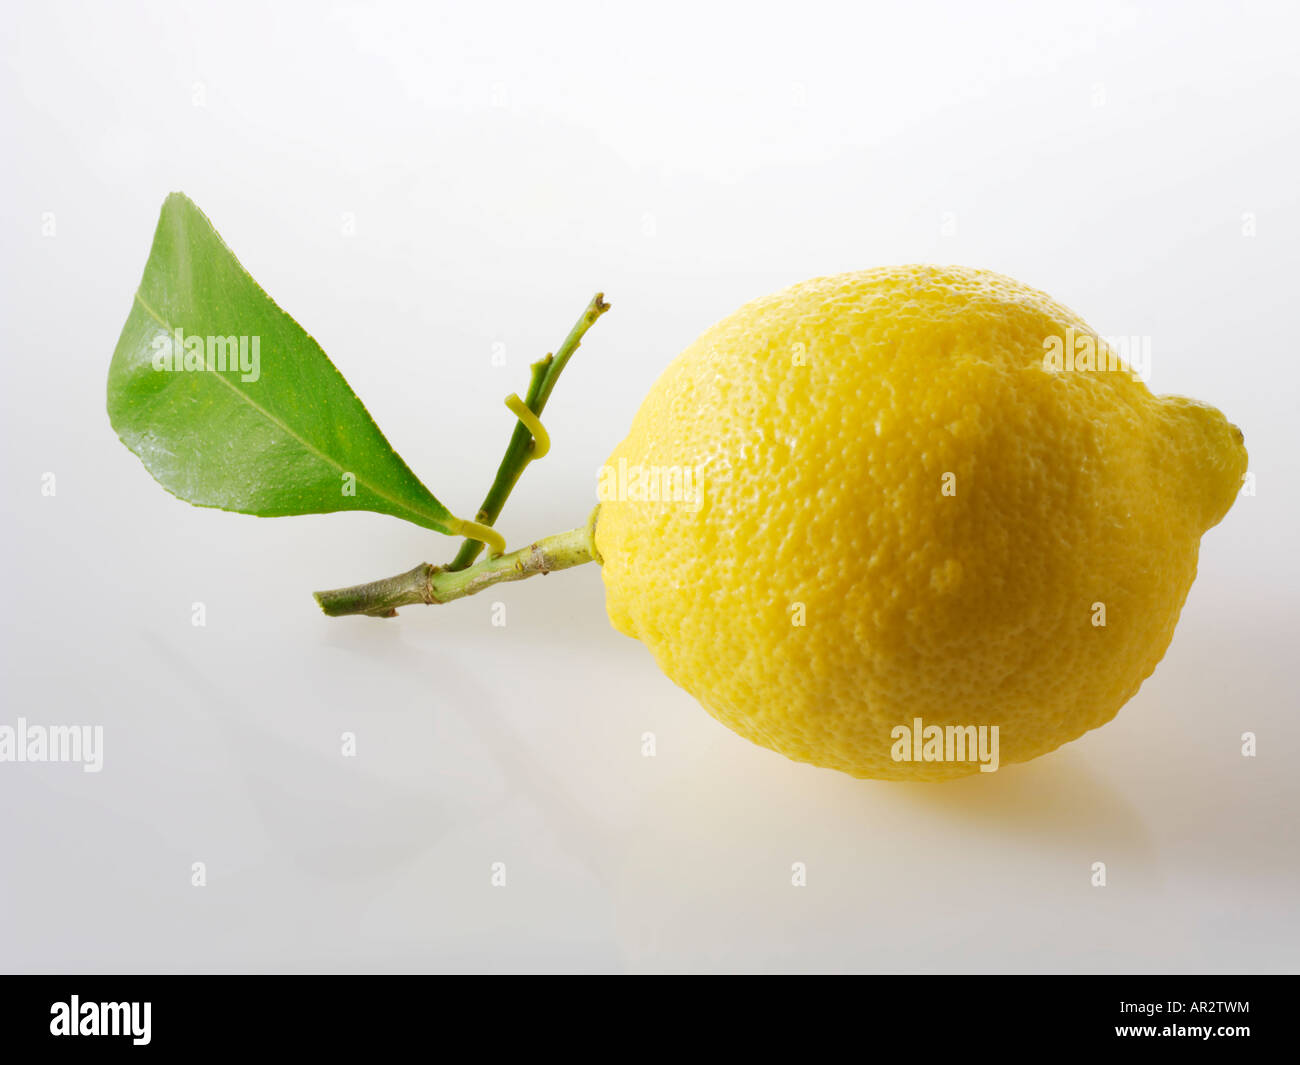 Whole uncut Lemon with leaf Stock Photo